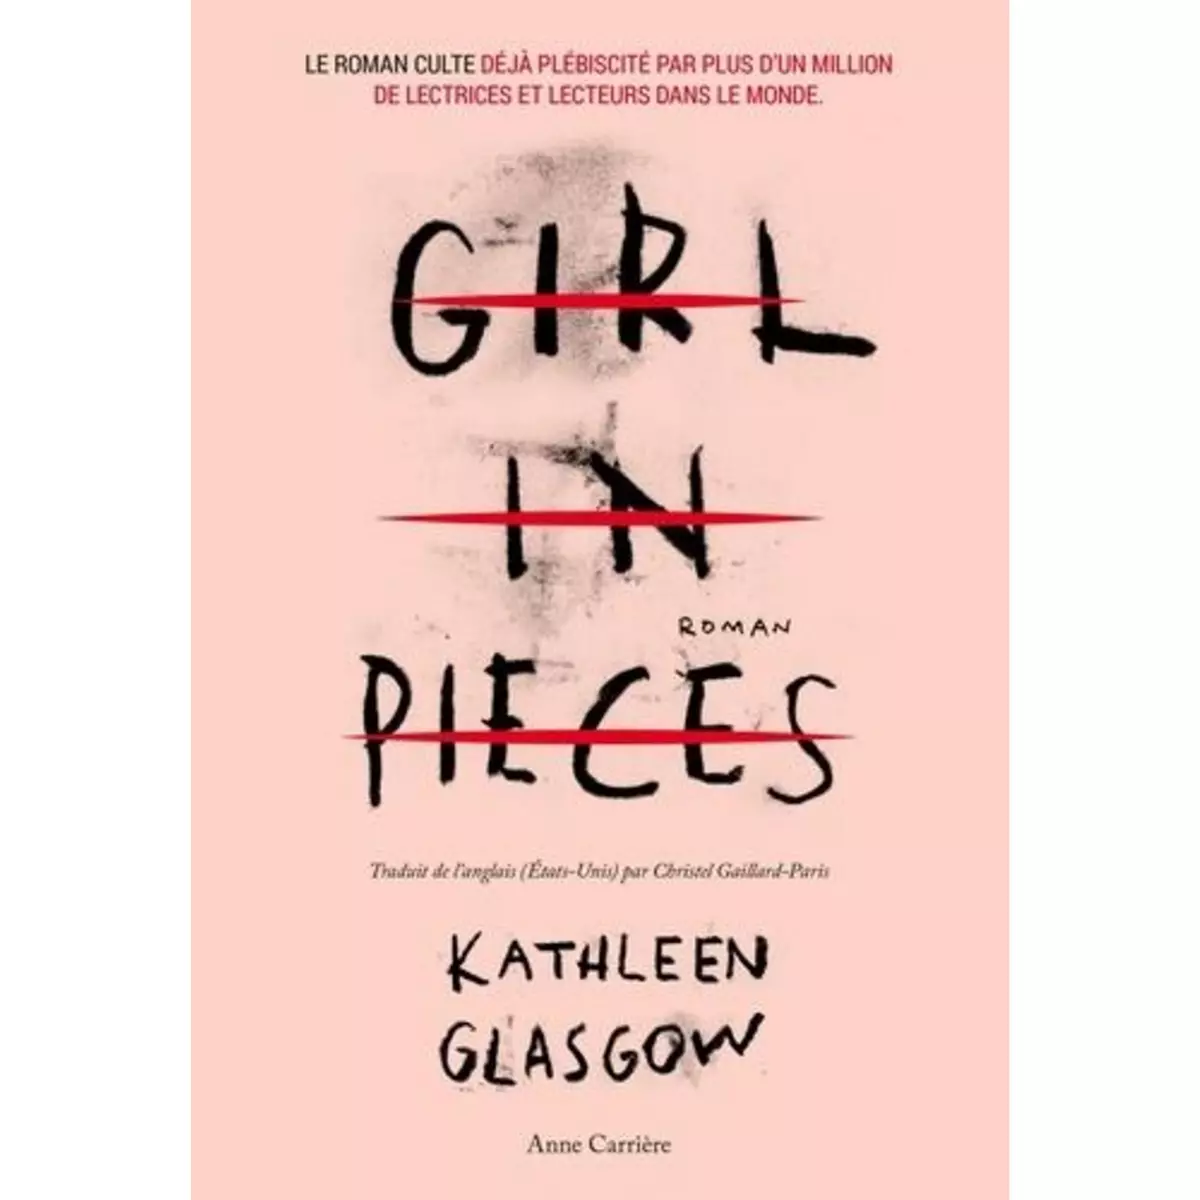  GIRL IN PIECES, Glasgow Kathleen